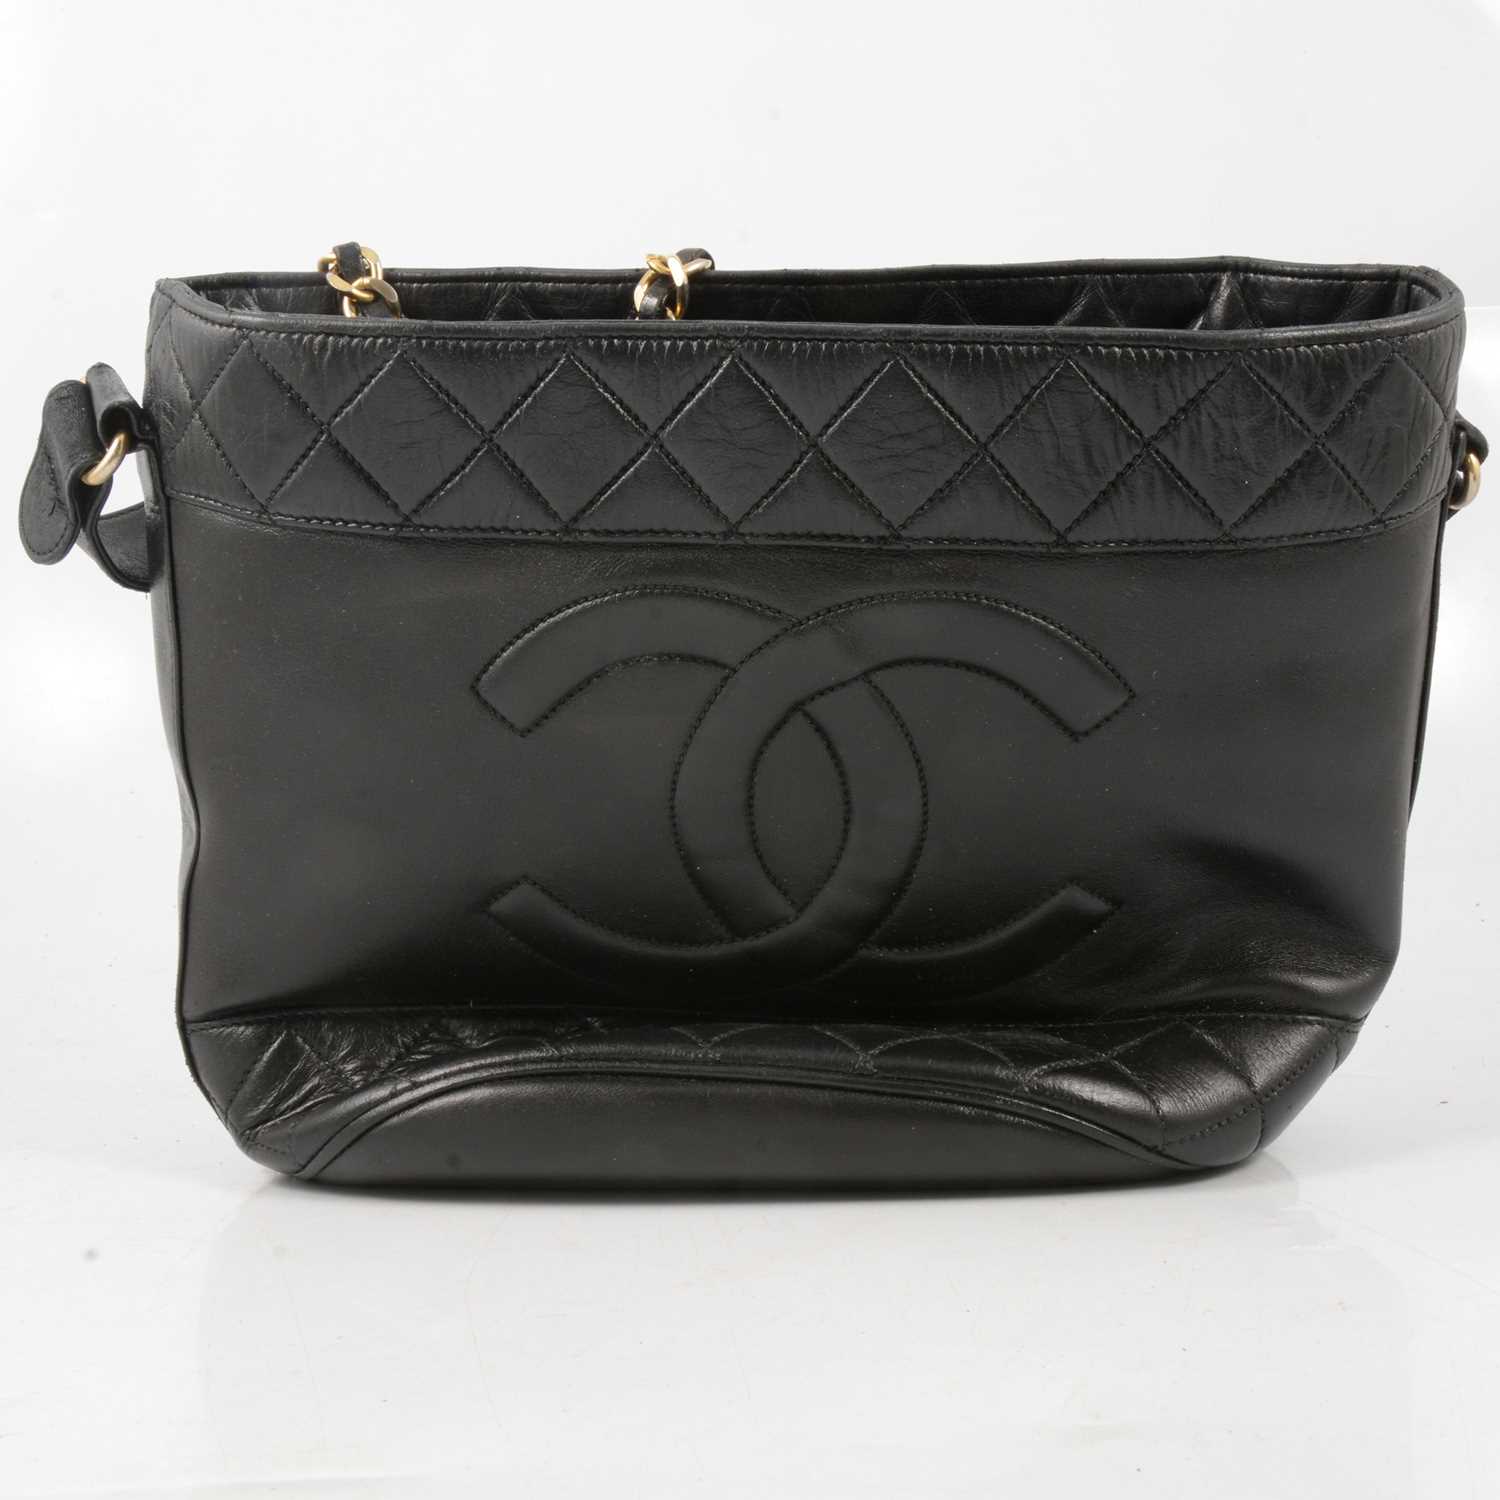 Lot 234 - Chanel - a lady's 1960's vintage black leather handbag.